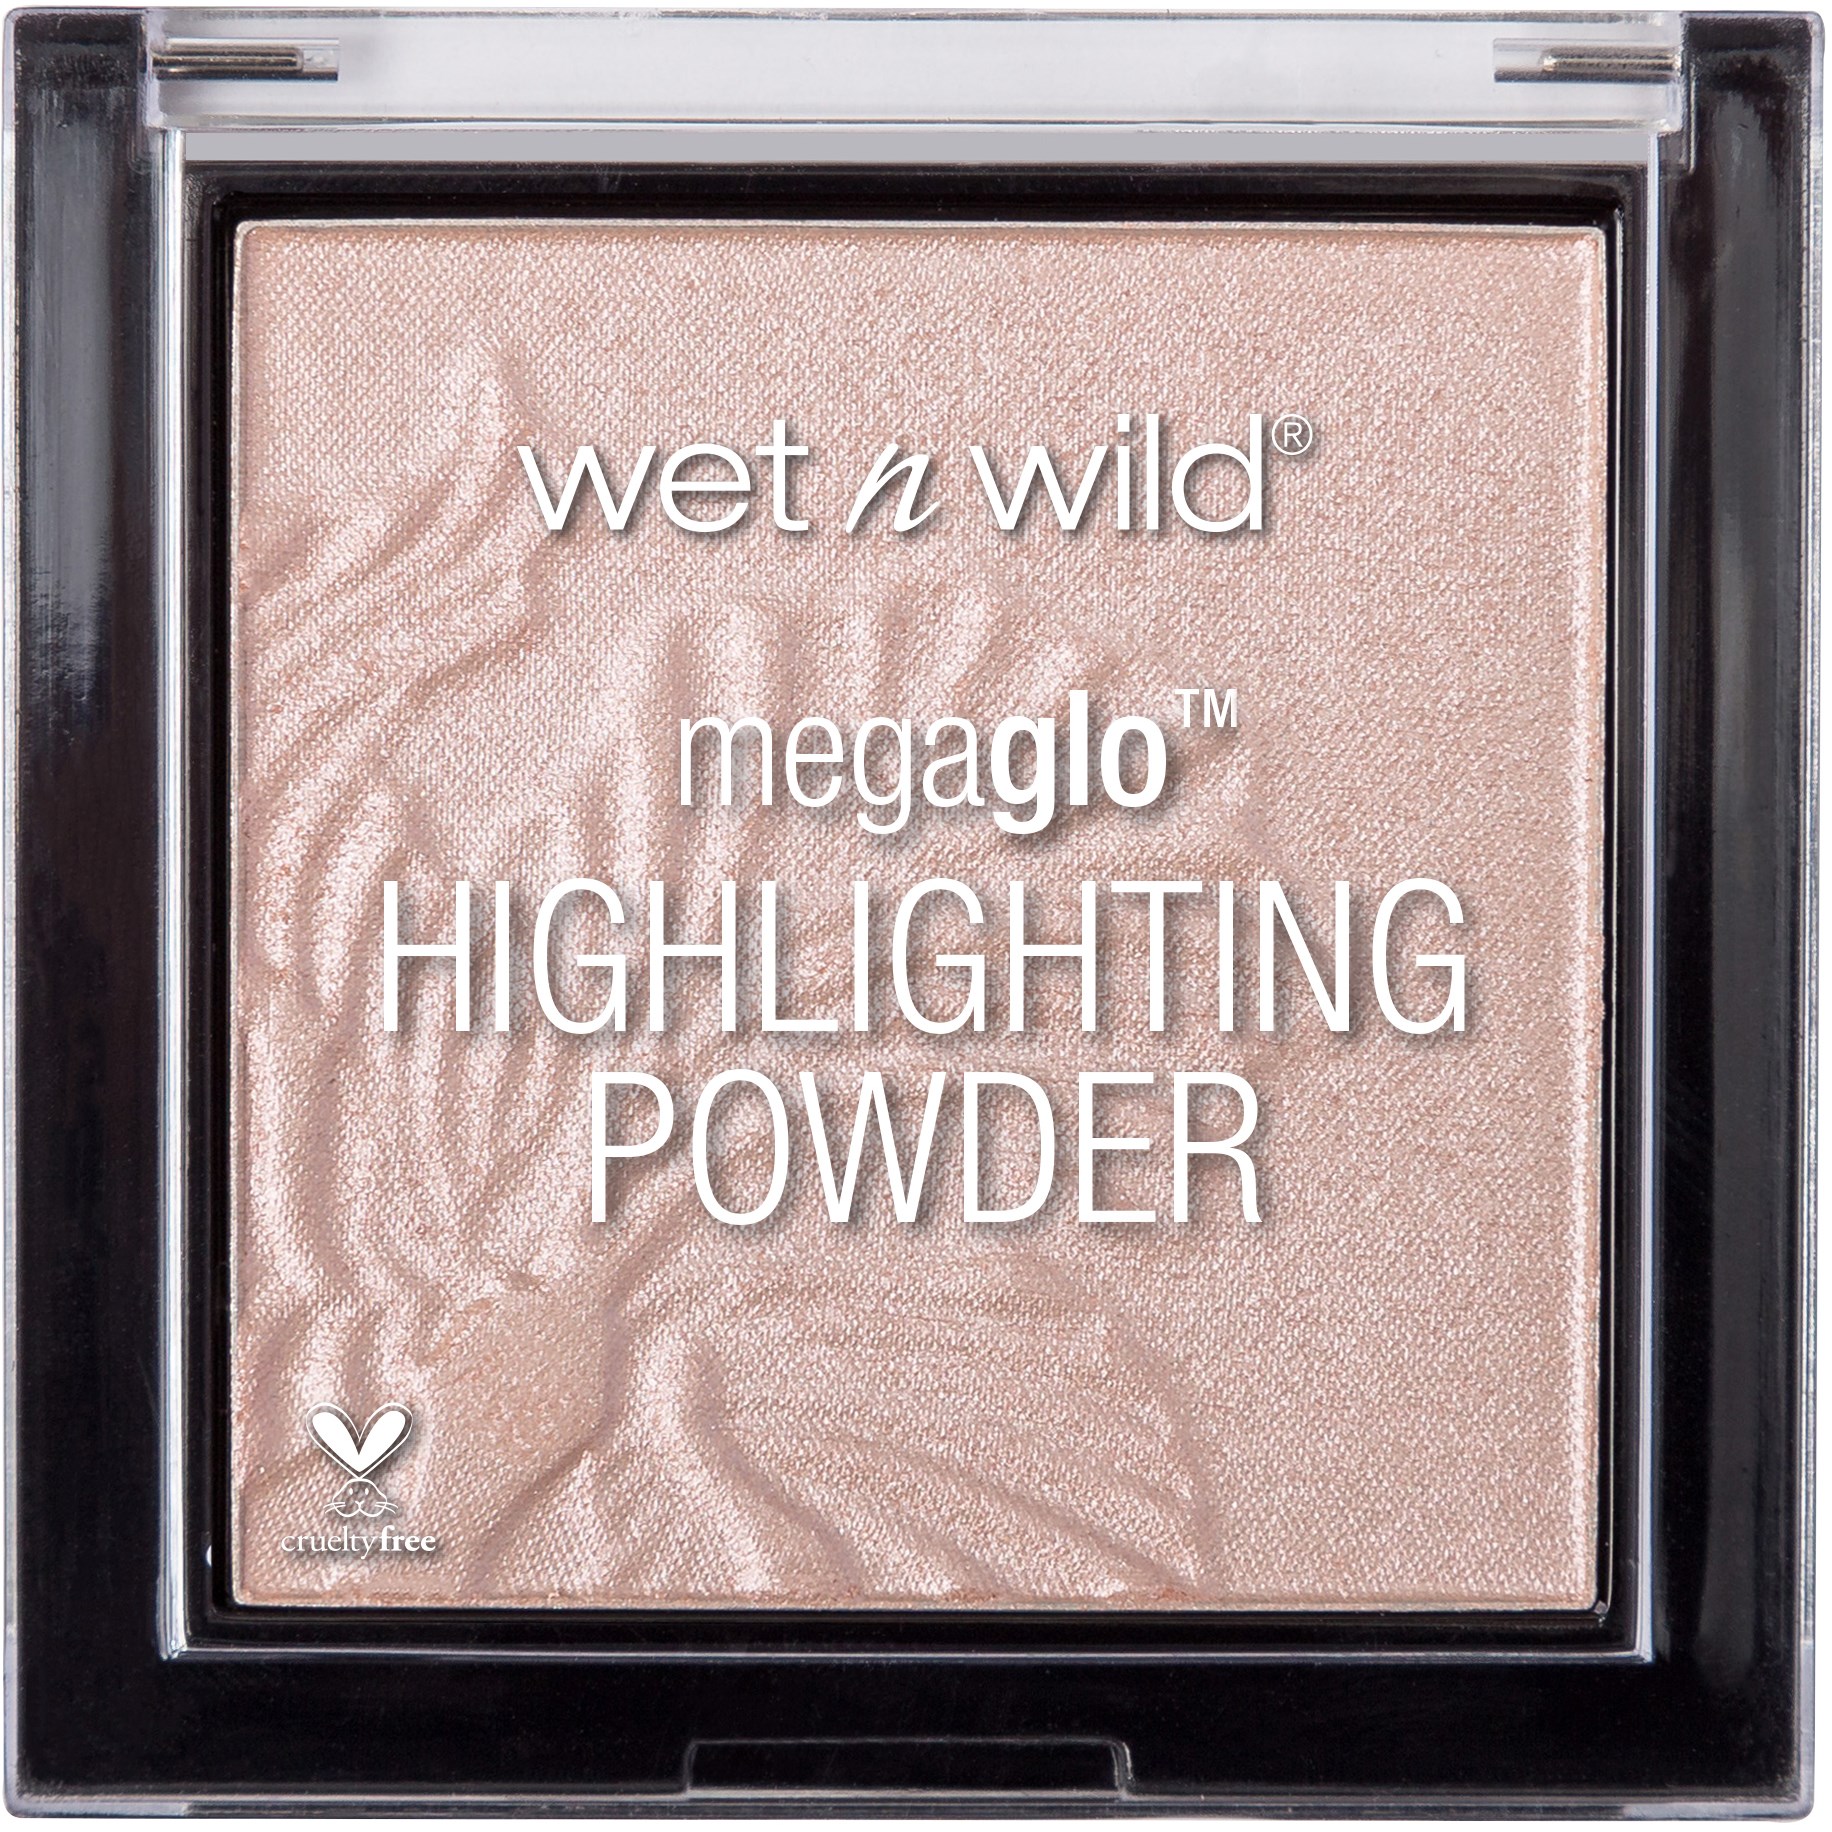 Bilde av Wet N Wild Megalast Megaglo Highlighting Powder - Blossom Glow